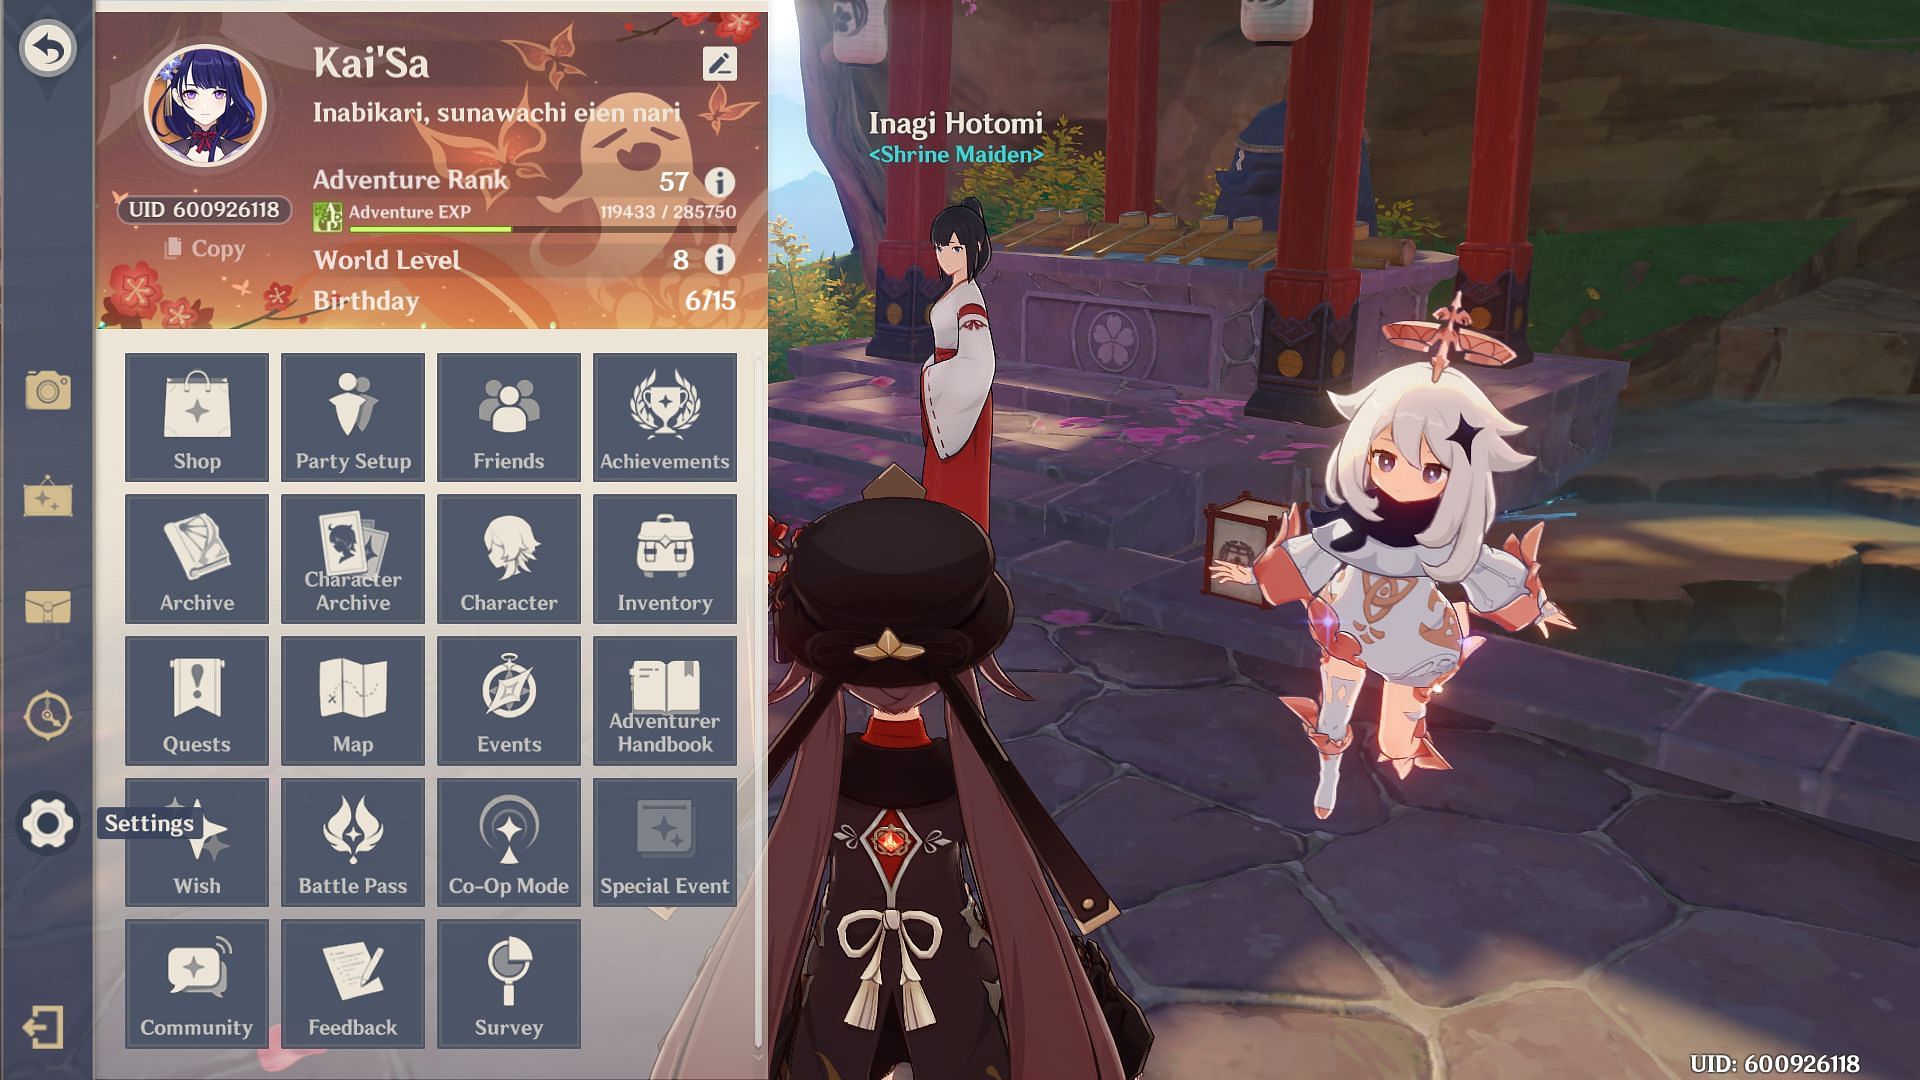 Open the main menu in the game (Image via Hoyoverse)